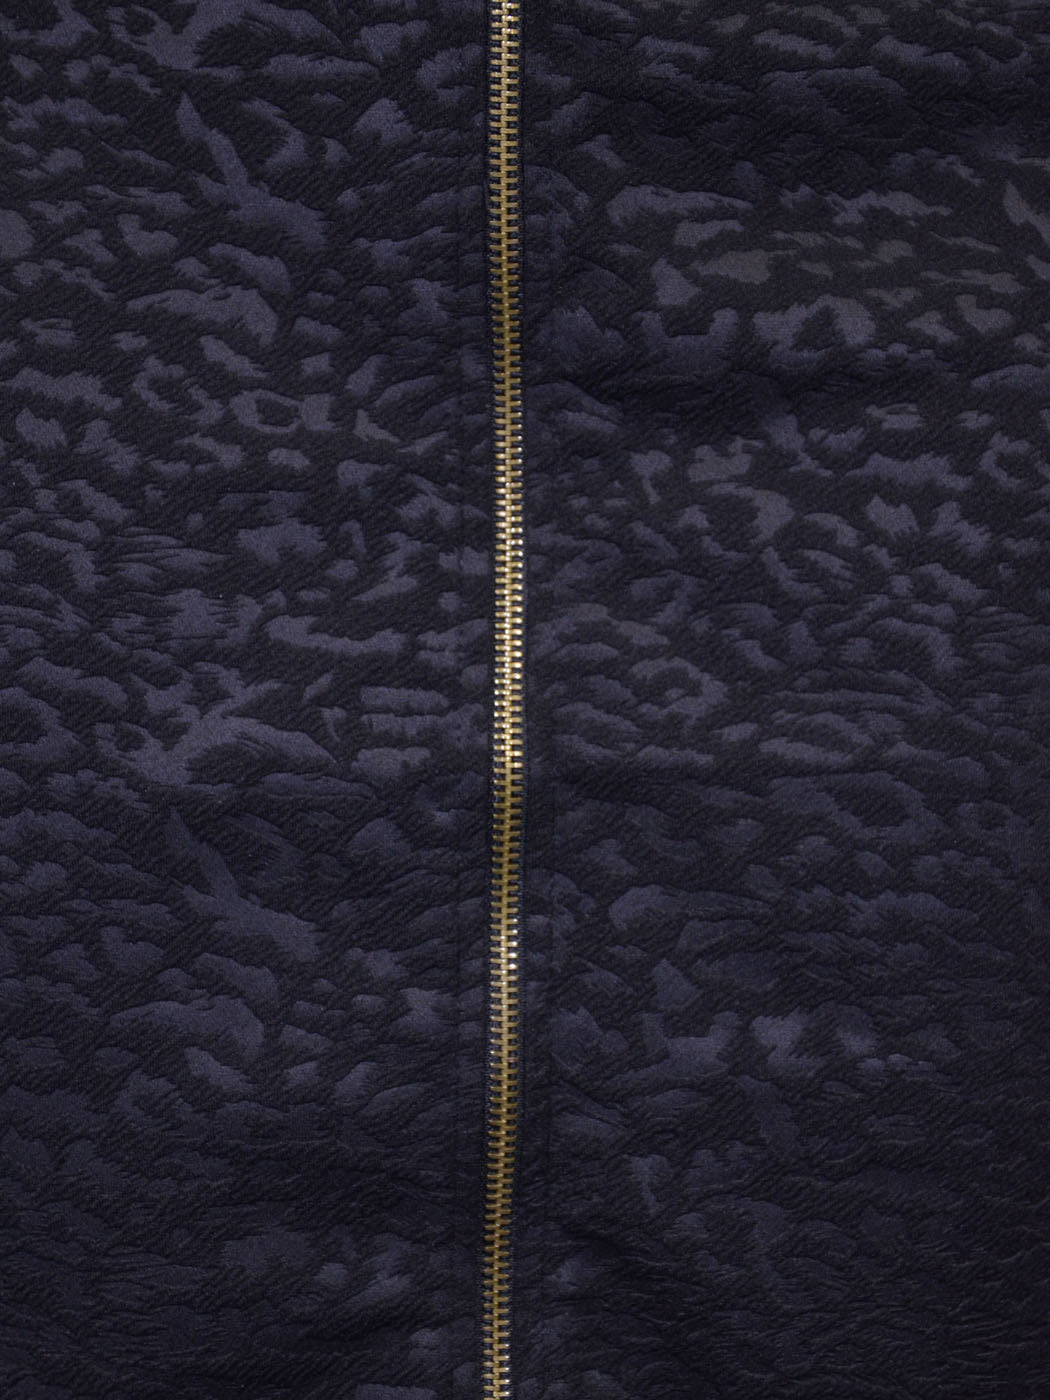 Tresics Brand Black and Grey Leopard Print Panels Exposed Zip Skirt